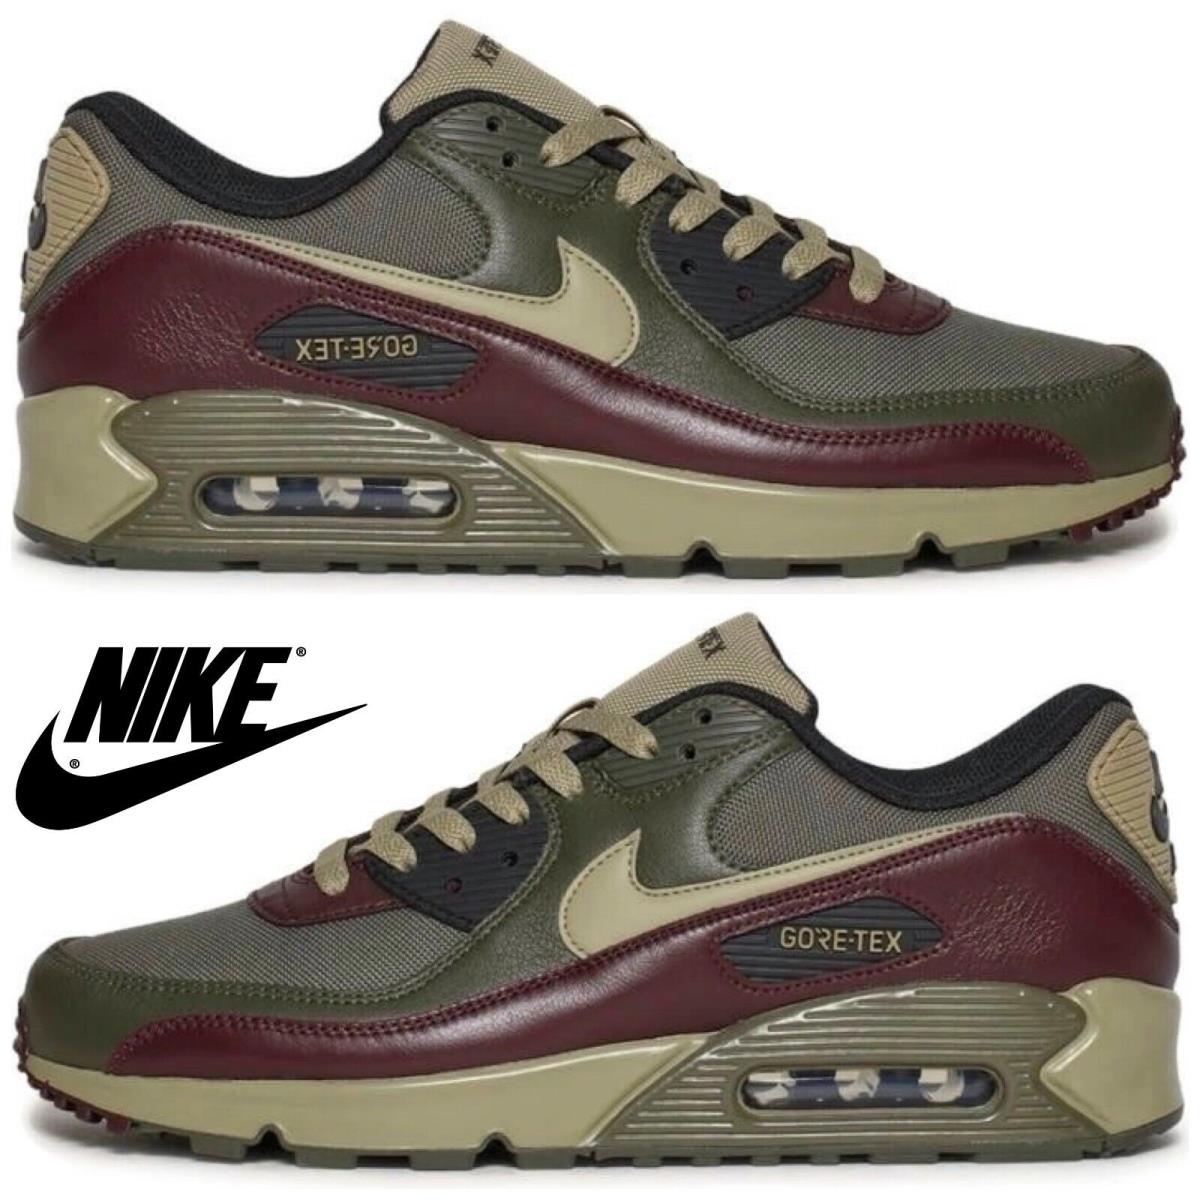 Nike Air Max 90 Gtx Men`s Sneakers Comfort Casual Sport Shoes Olive Khaki